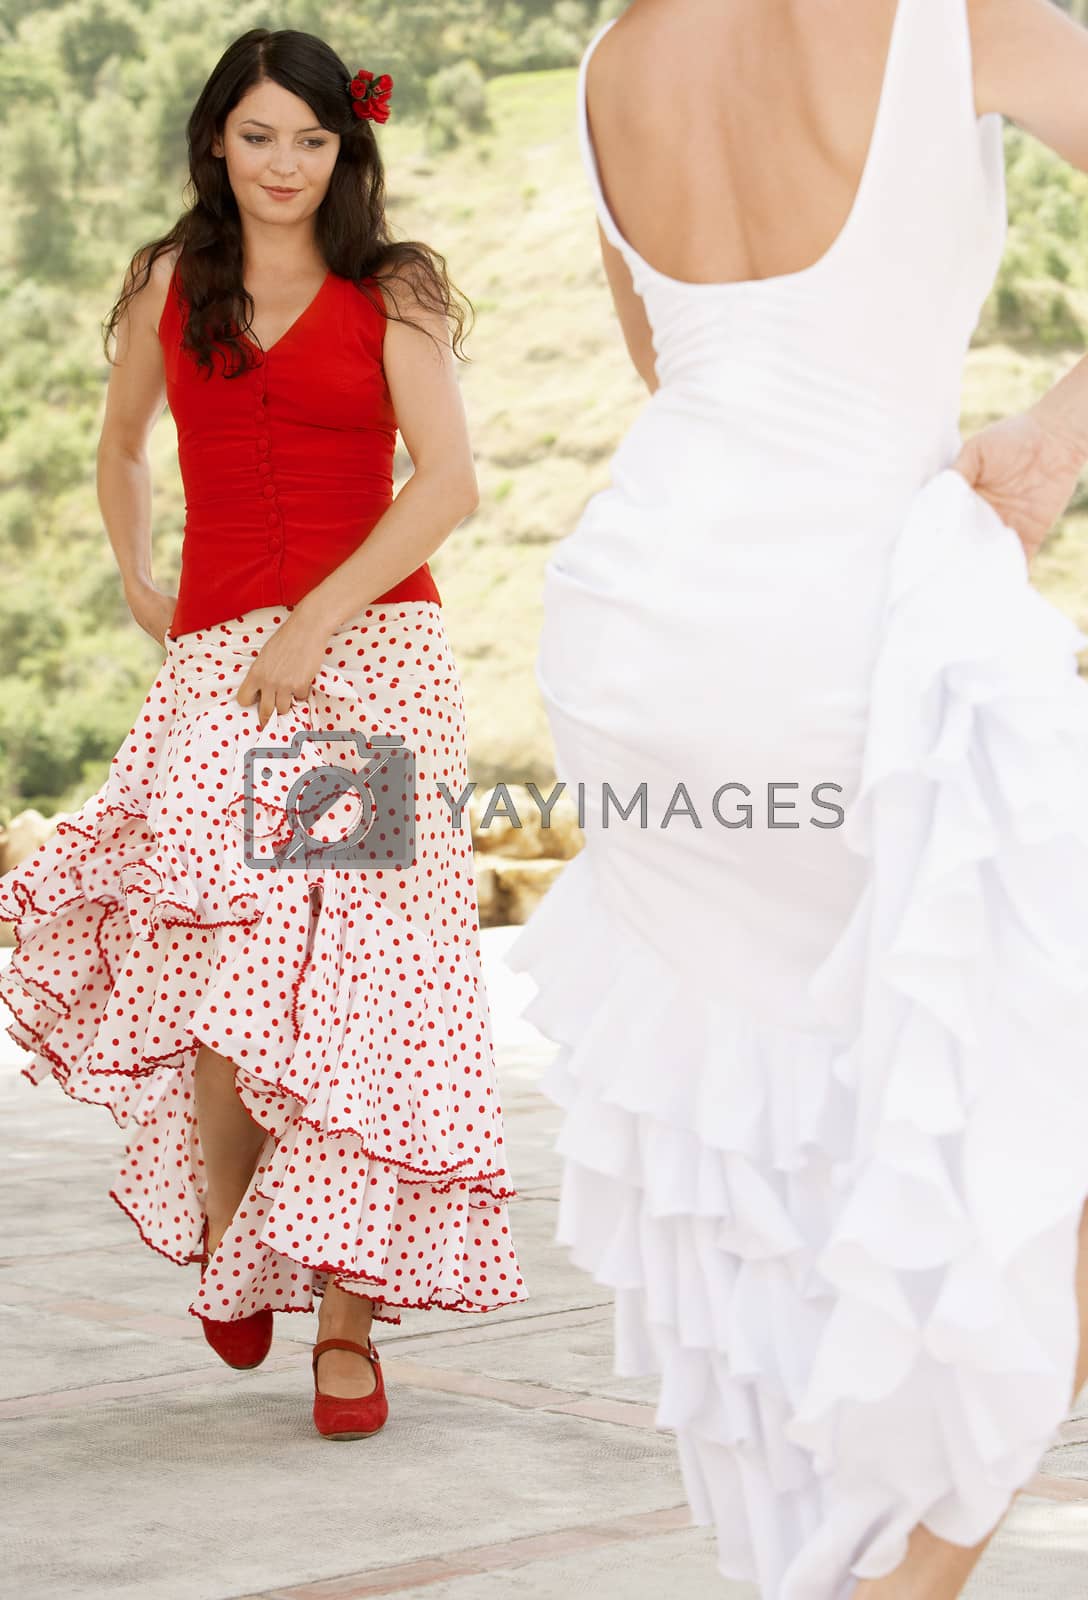 Royalty free image of Beautiful young women dancing flamenco outdoors by moodboard